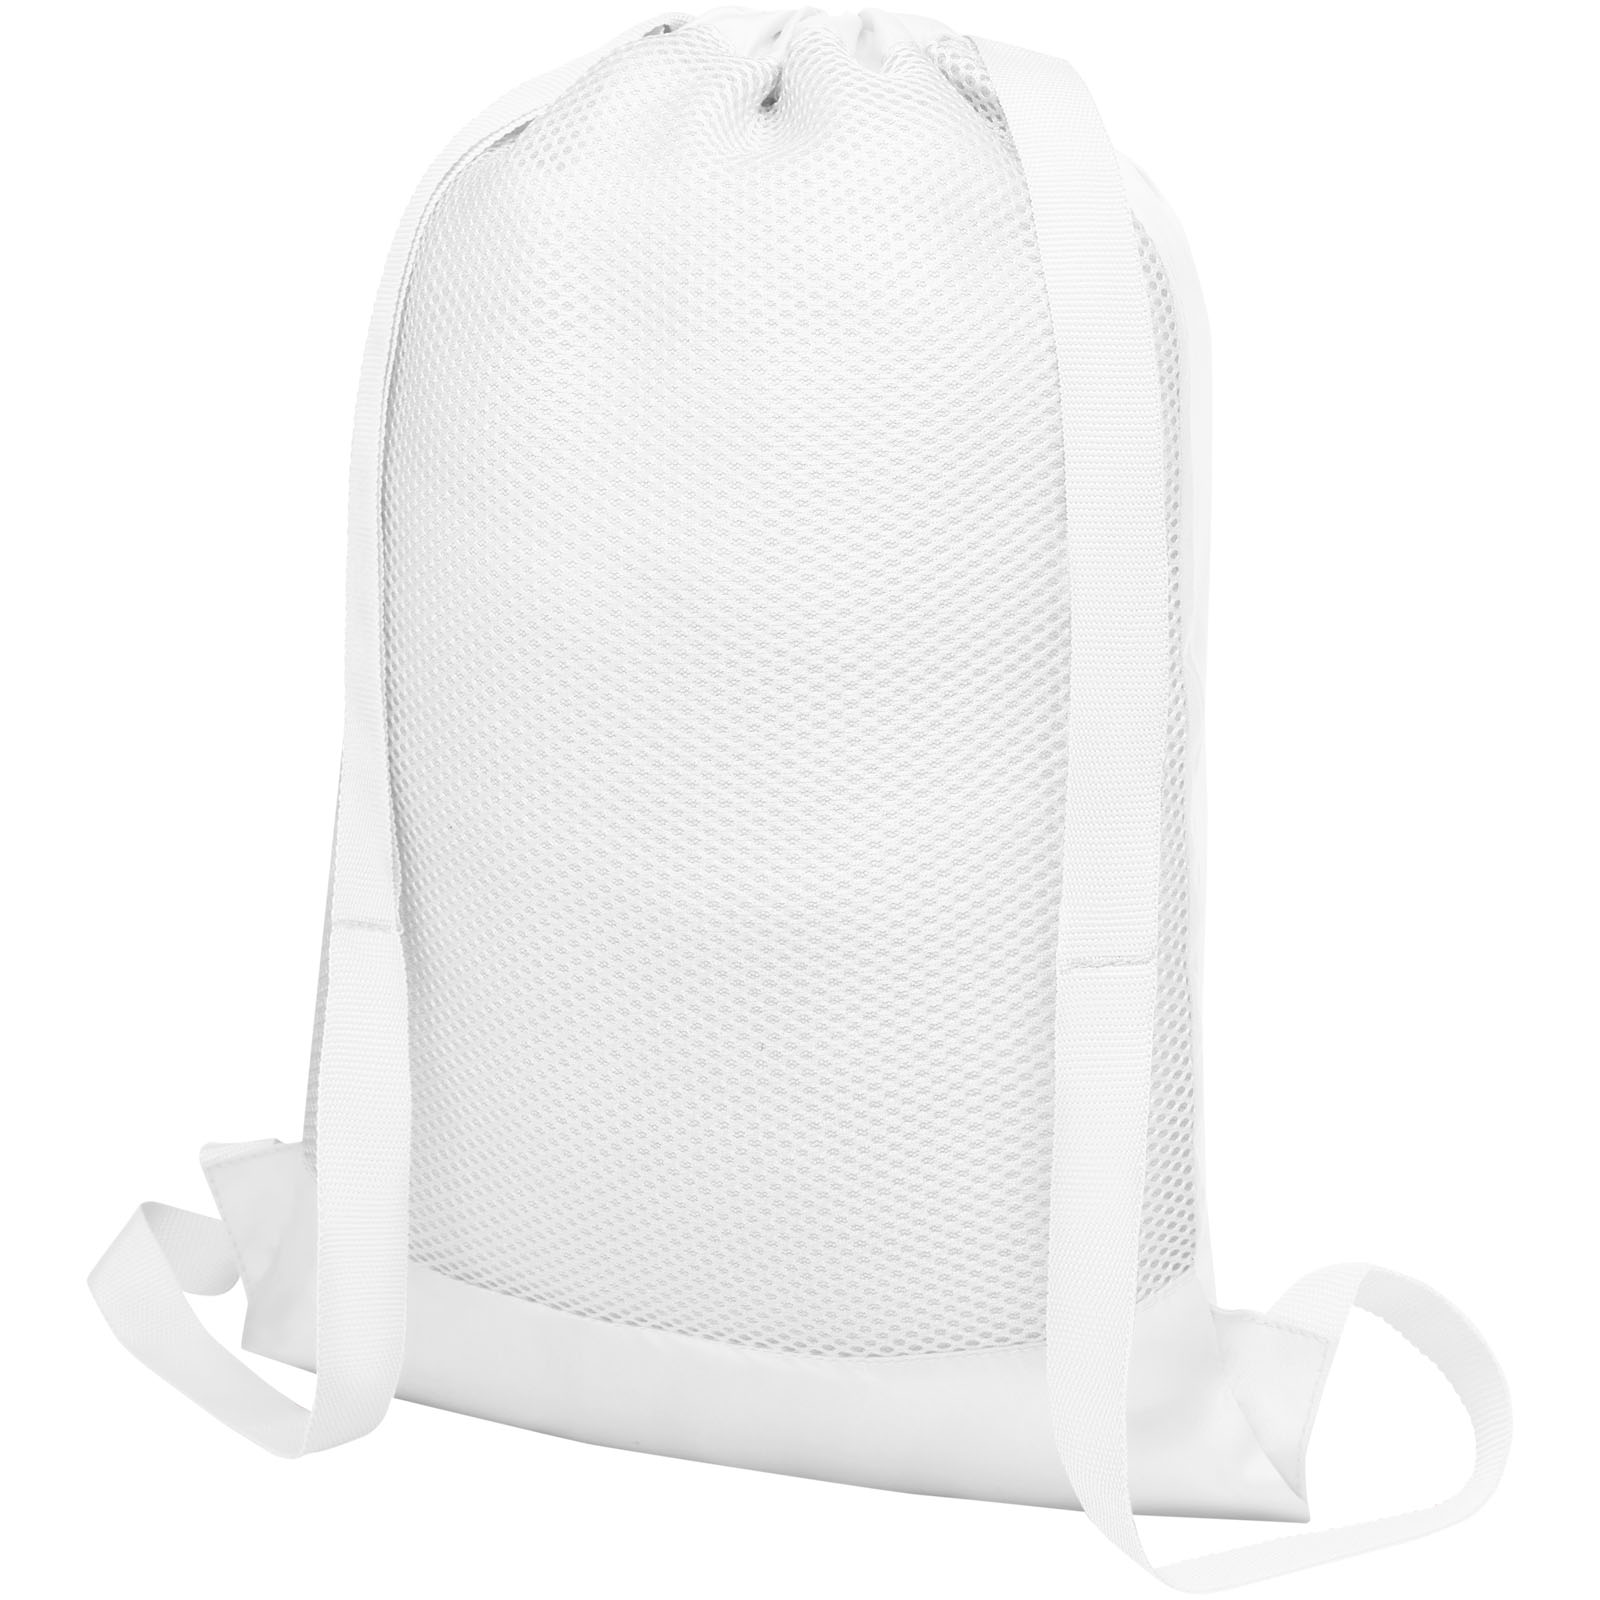 Advertising Drawstring Bags - Nadi mesh drawstring bag 5L - 0